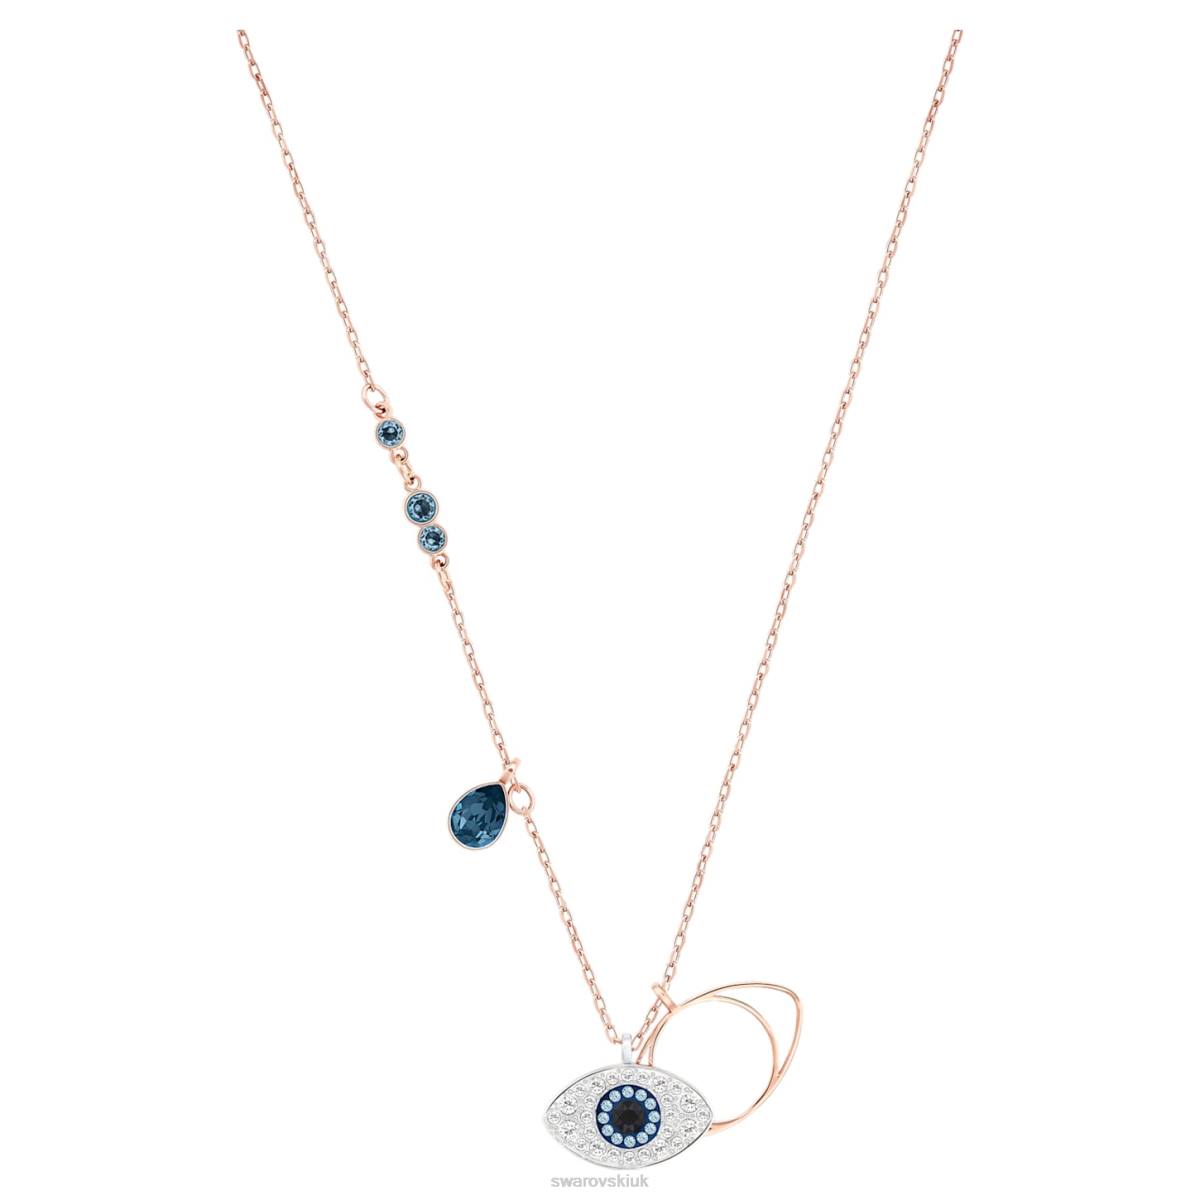 Jewelry Swarovski Symbolic pendant Evil eye, Blue, Mixed metal finish 48JX166